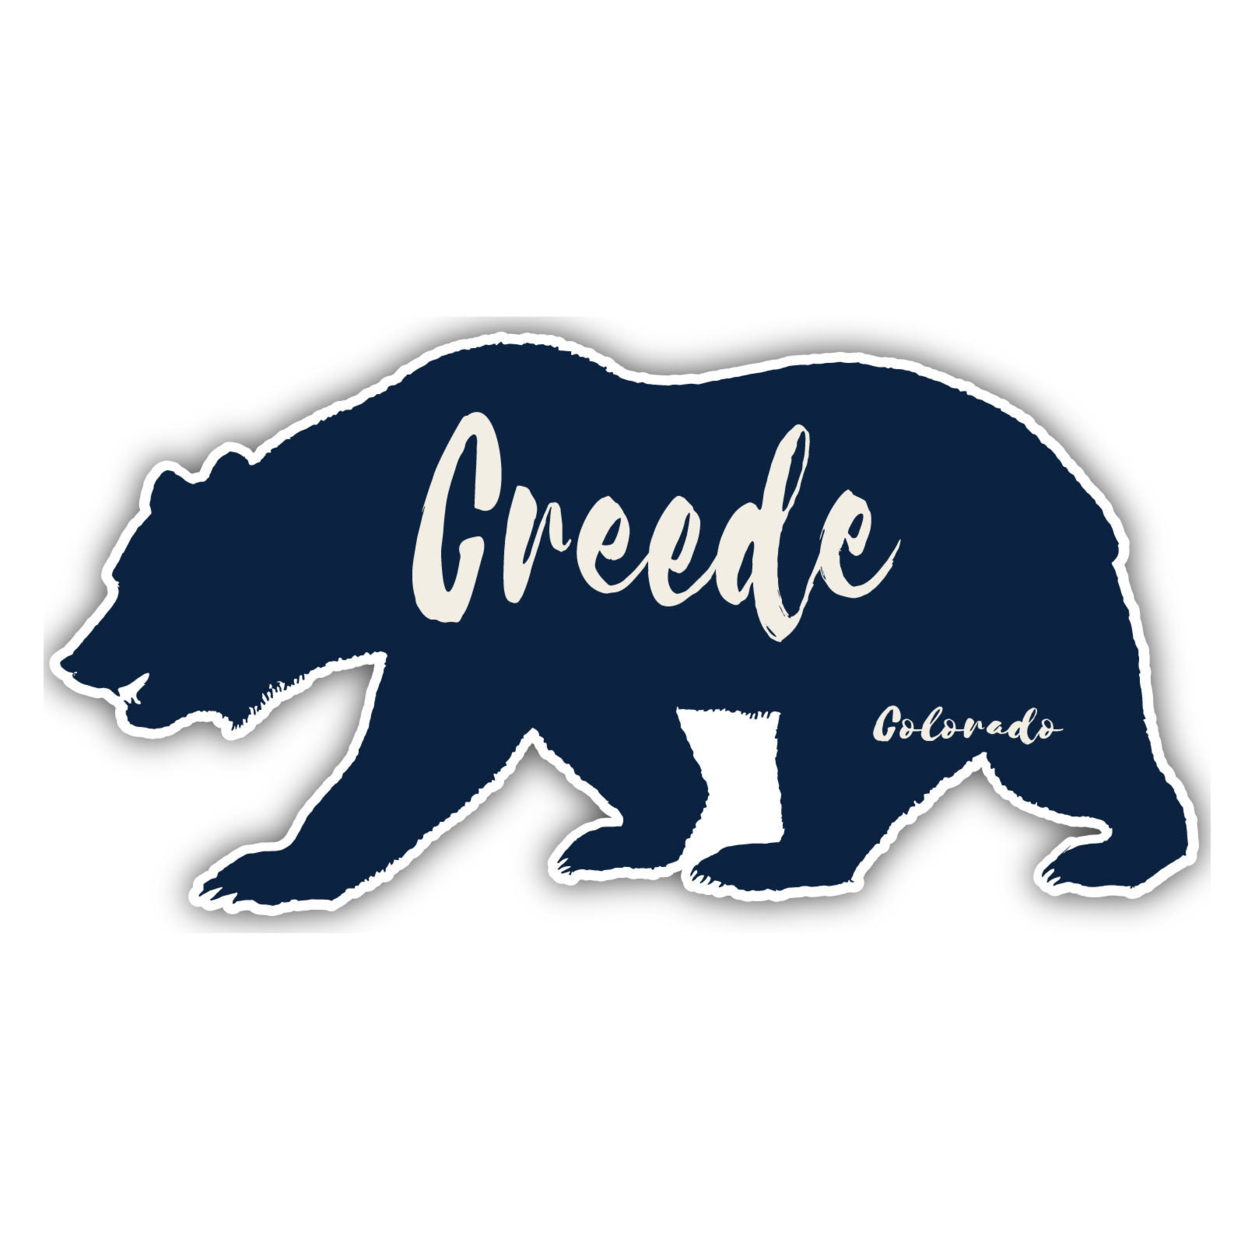 Creede Colorado Souvenir Decorative Stickers (Choose Theme And Size) - Single Unit, 8-Inch, Camp Life